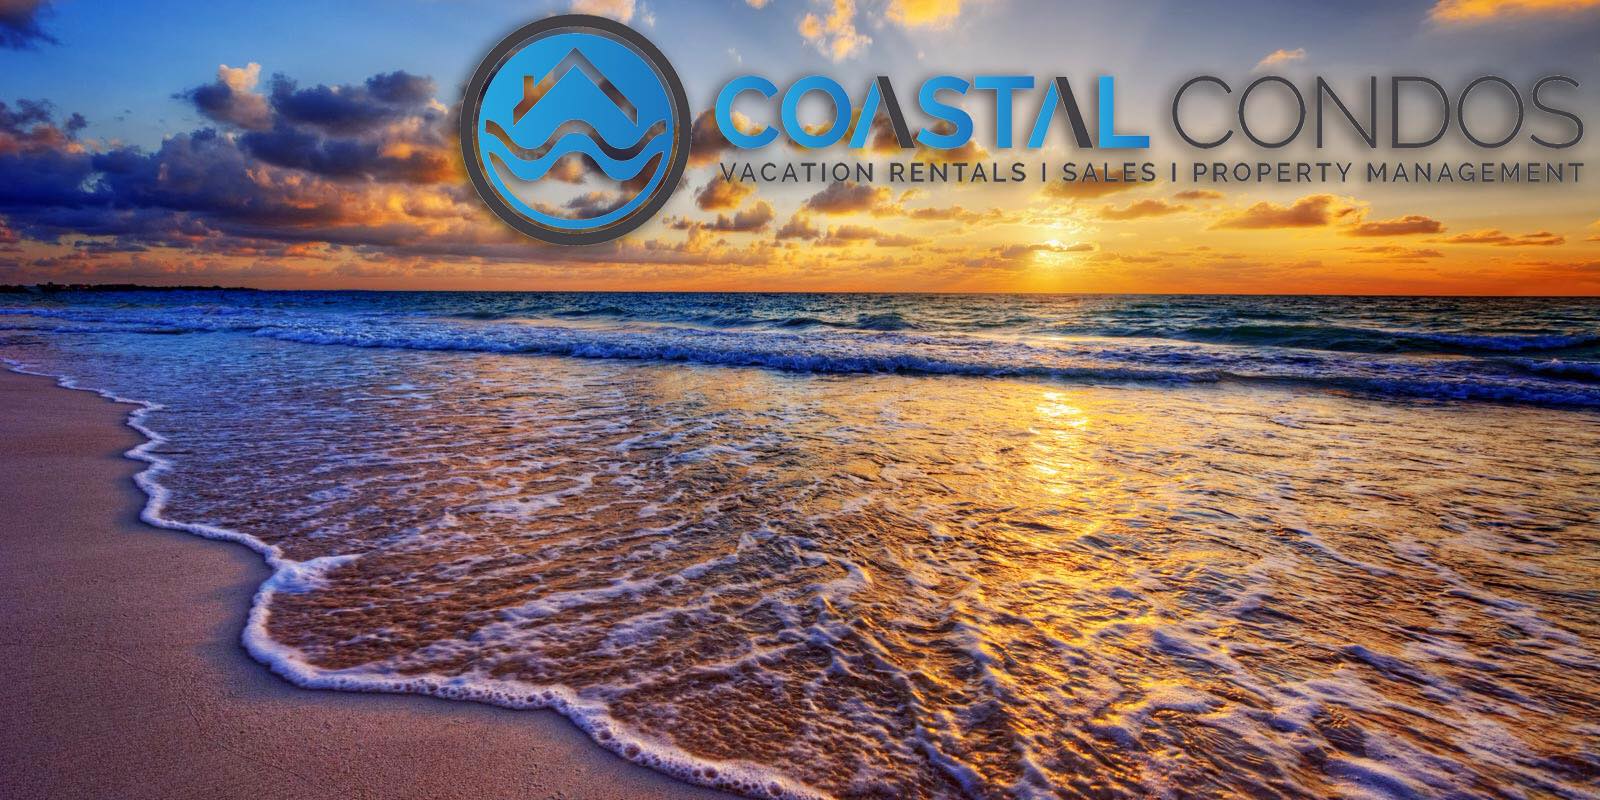 Coastal Condos North Myrtle Beach Real Estate Vacation Rental Management Company